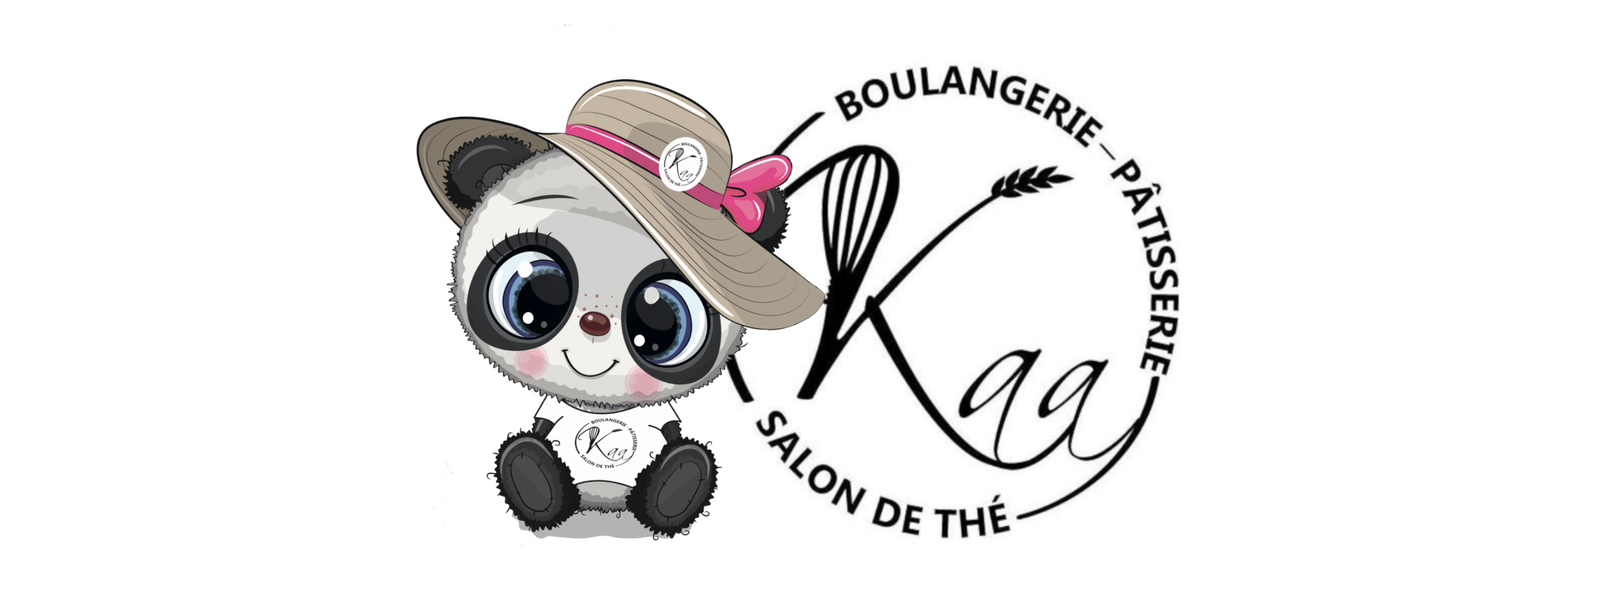 Boulangerie KAA image header